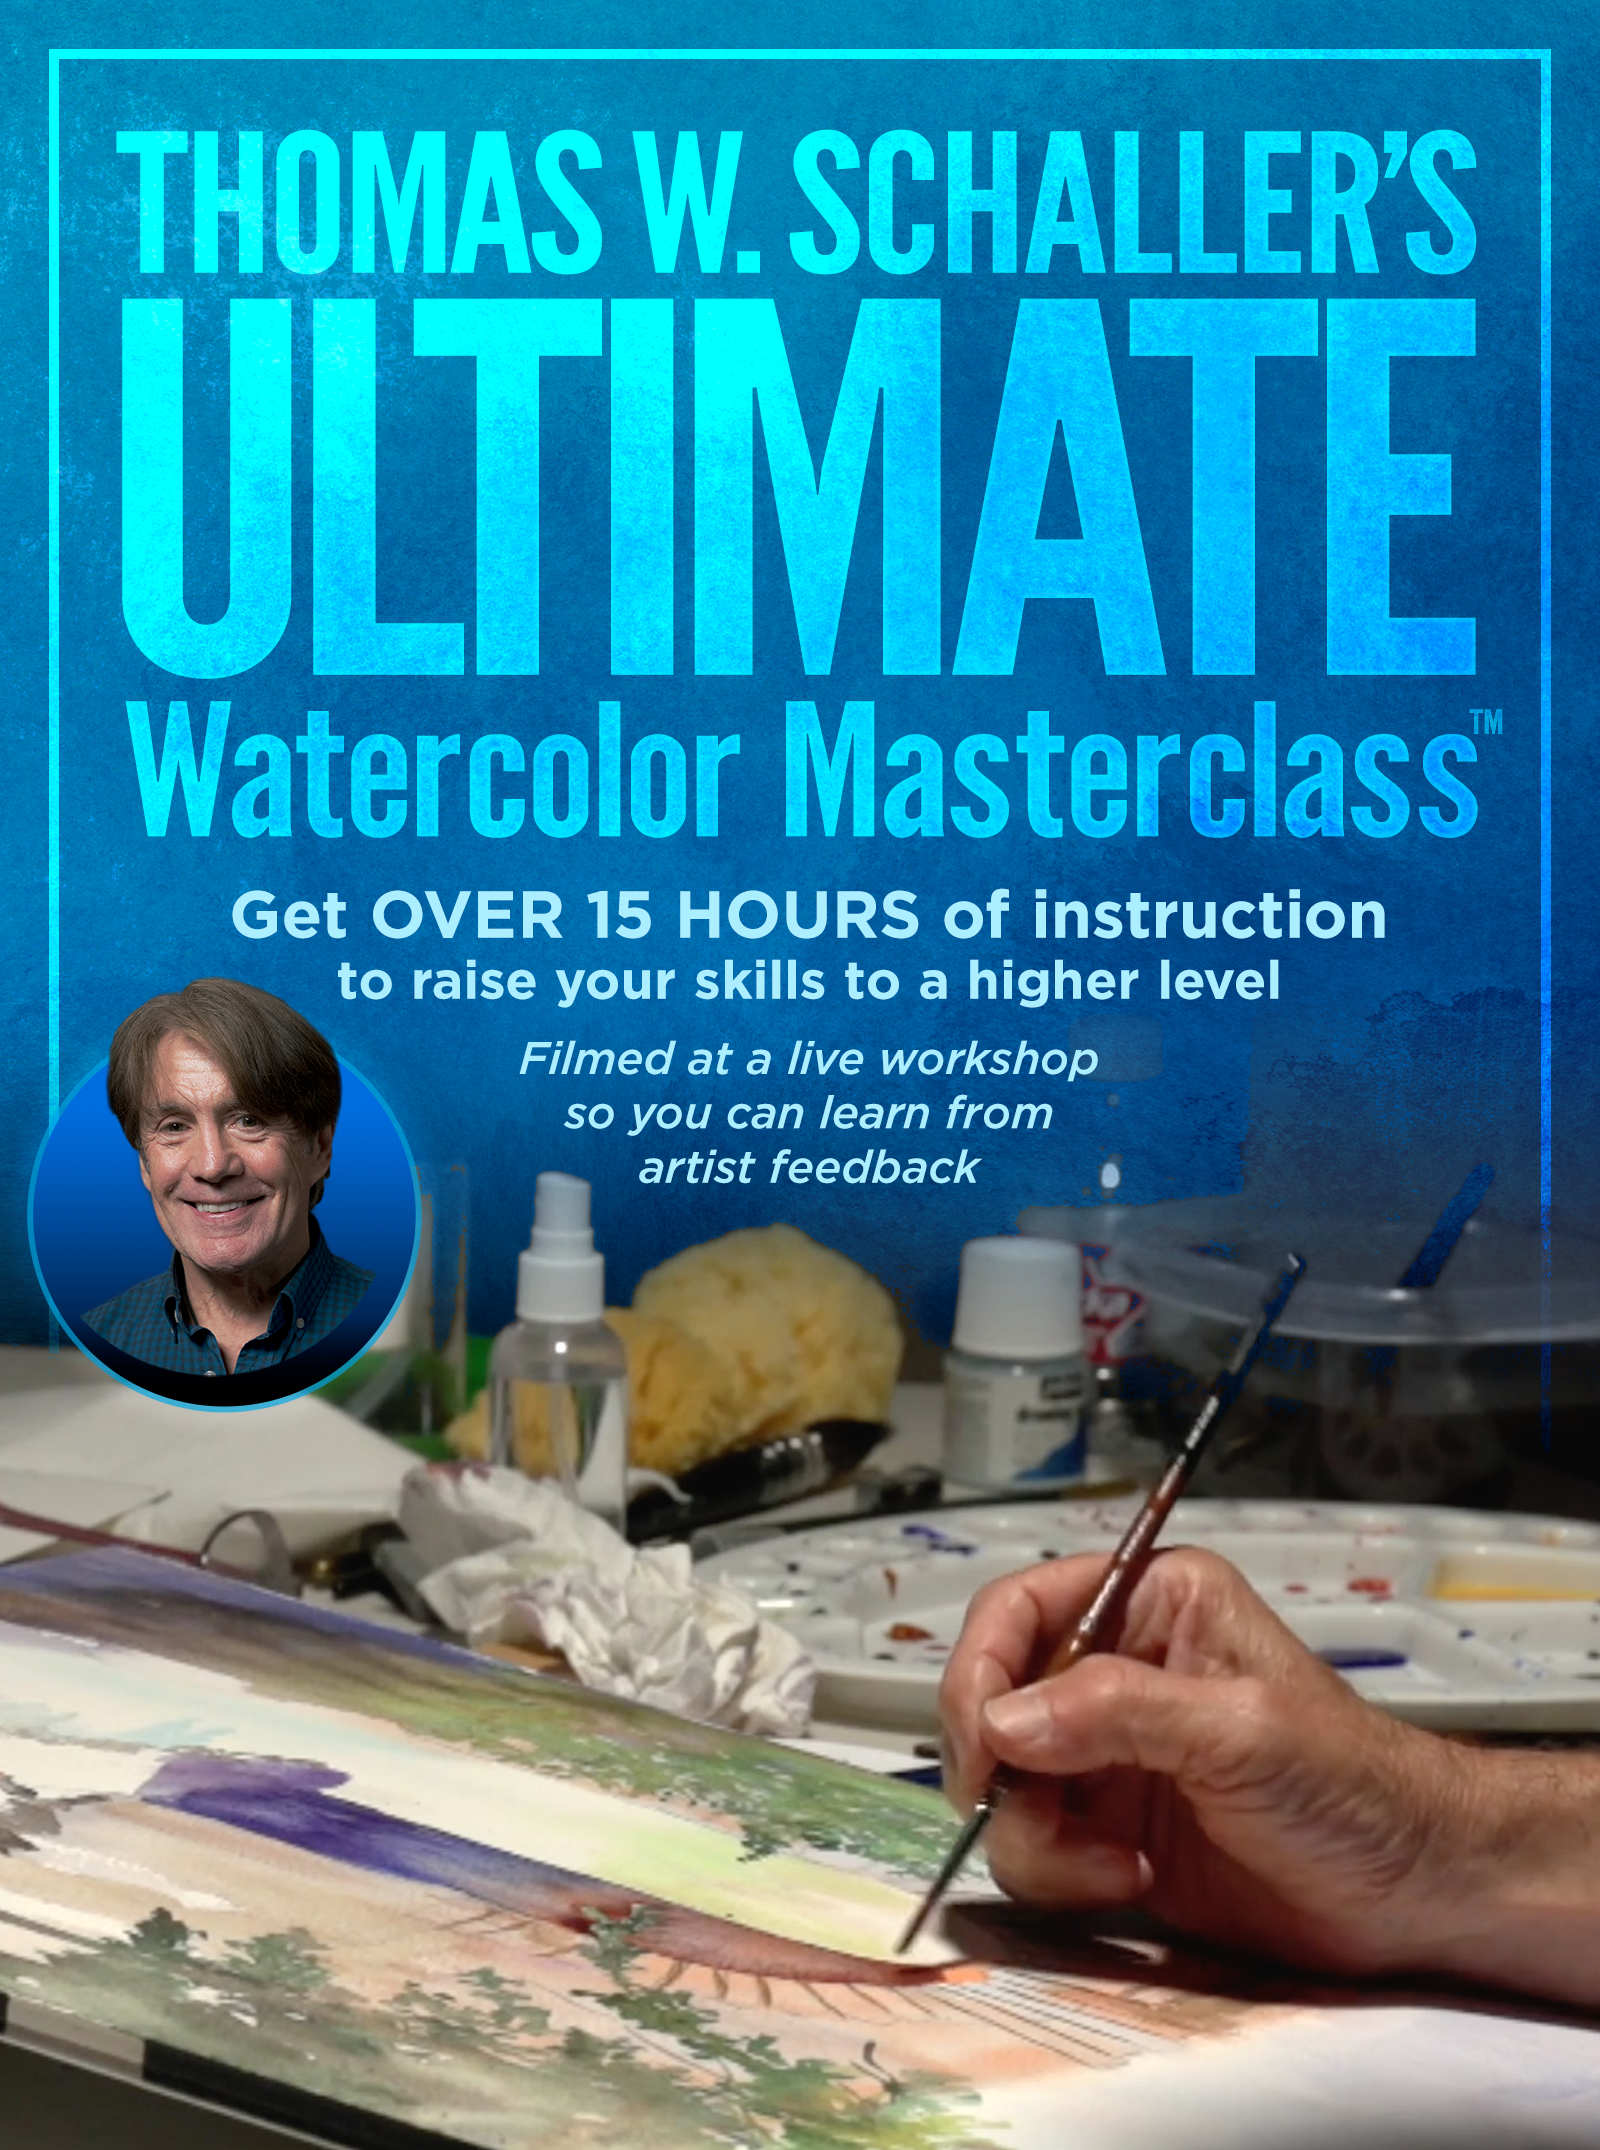 Thomas W. Schaller's Ultimate Watercolor Masterclass